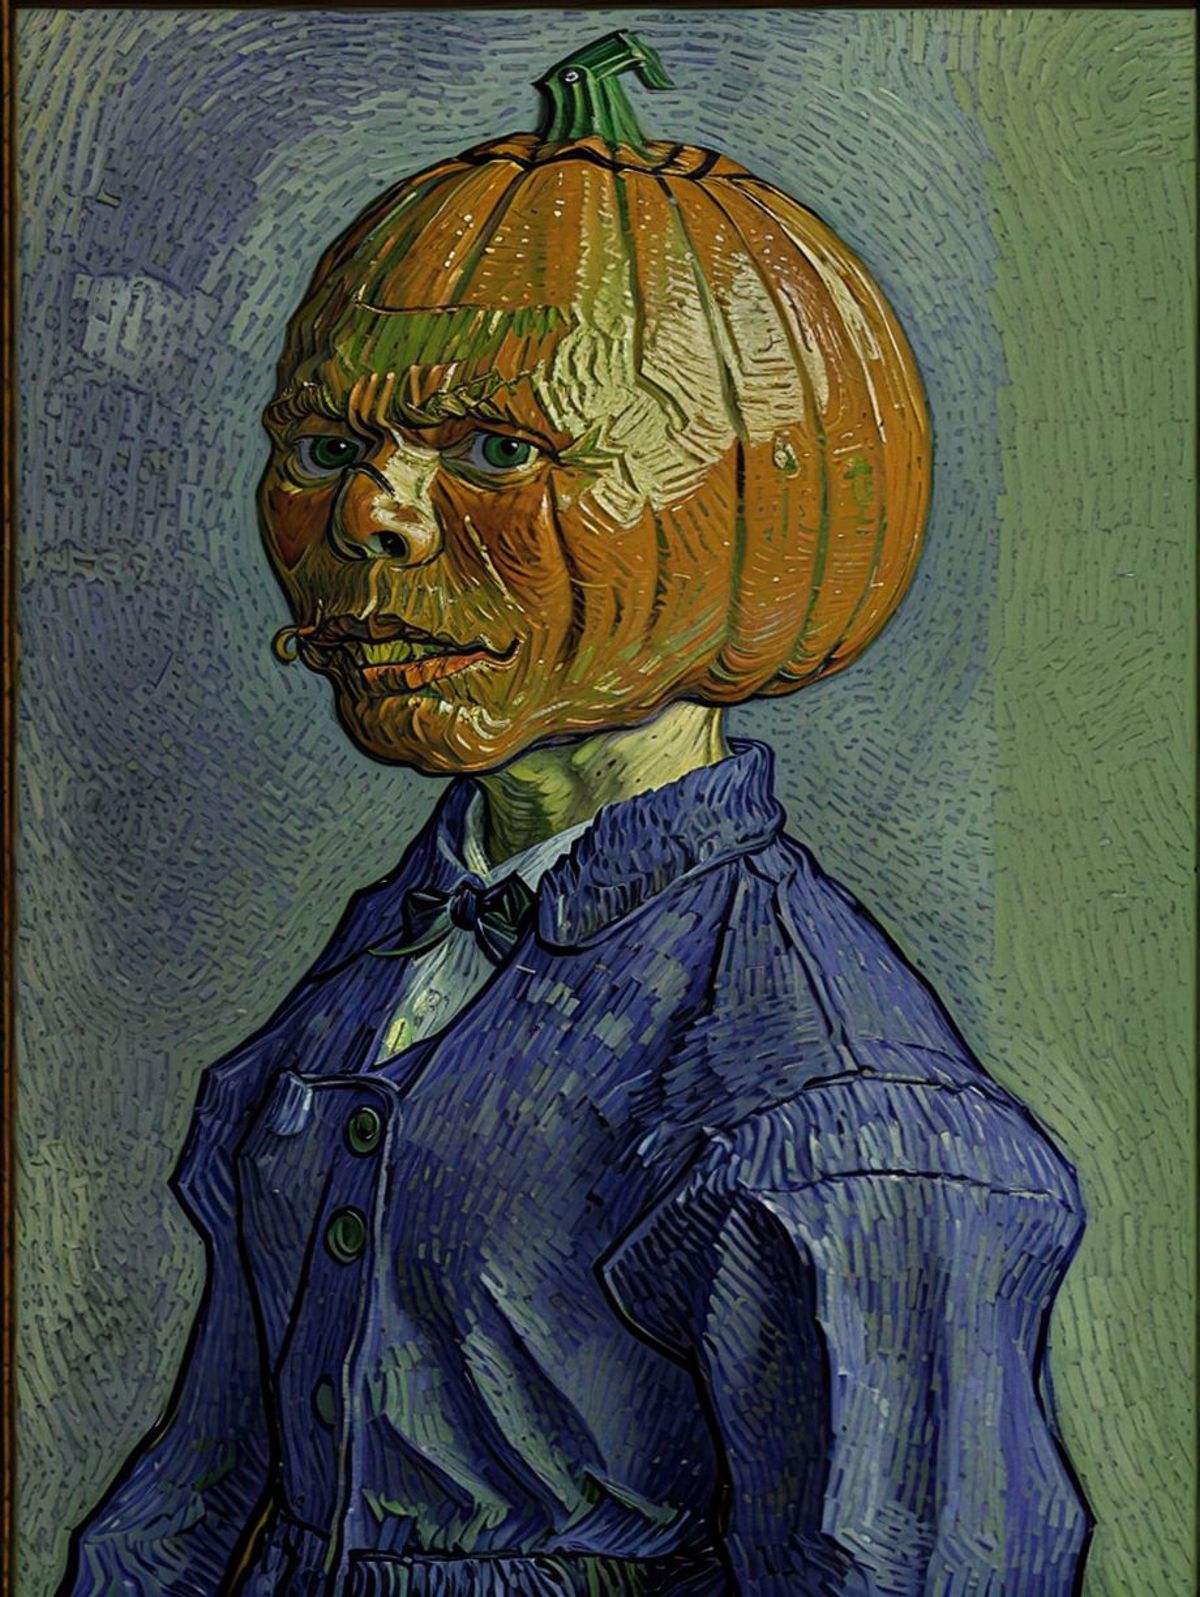 SD1.5 Pumpkin Head LoRA image by norod78